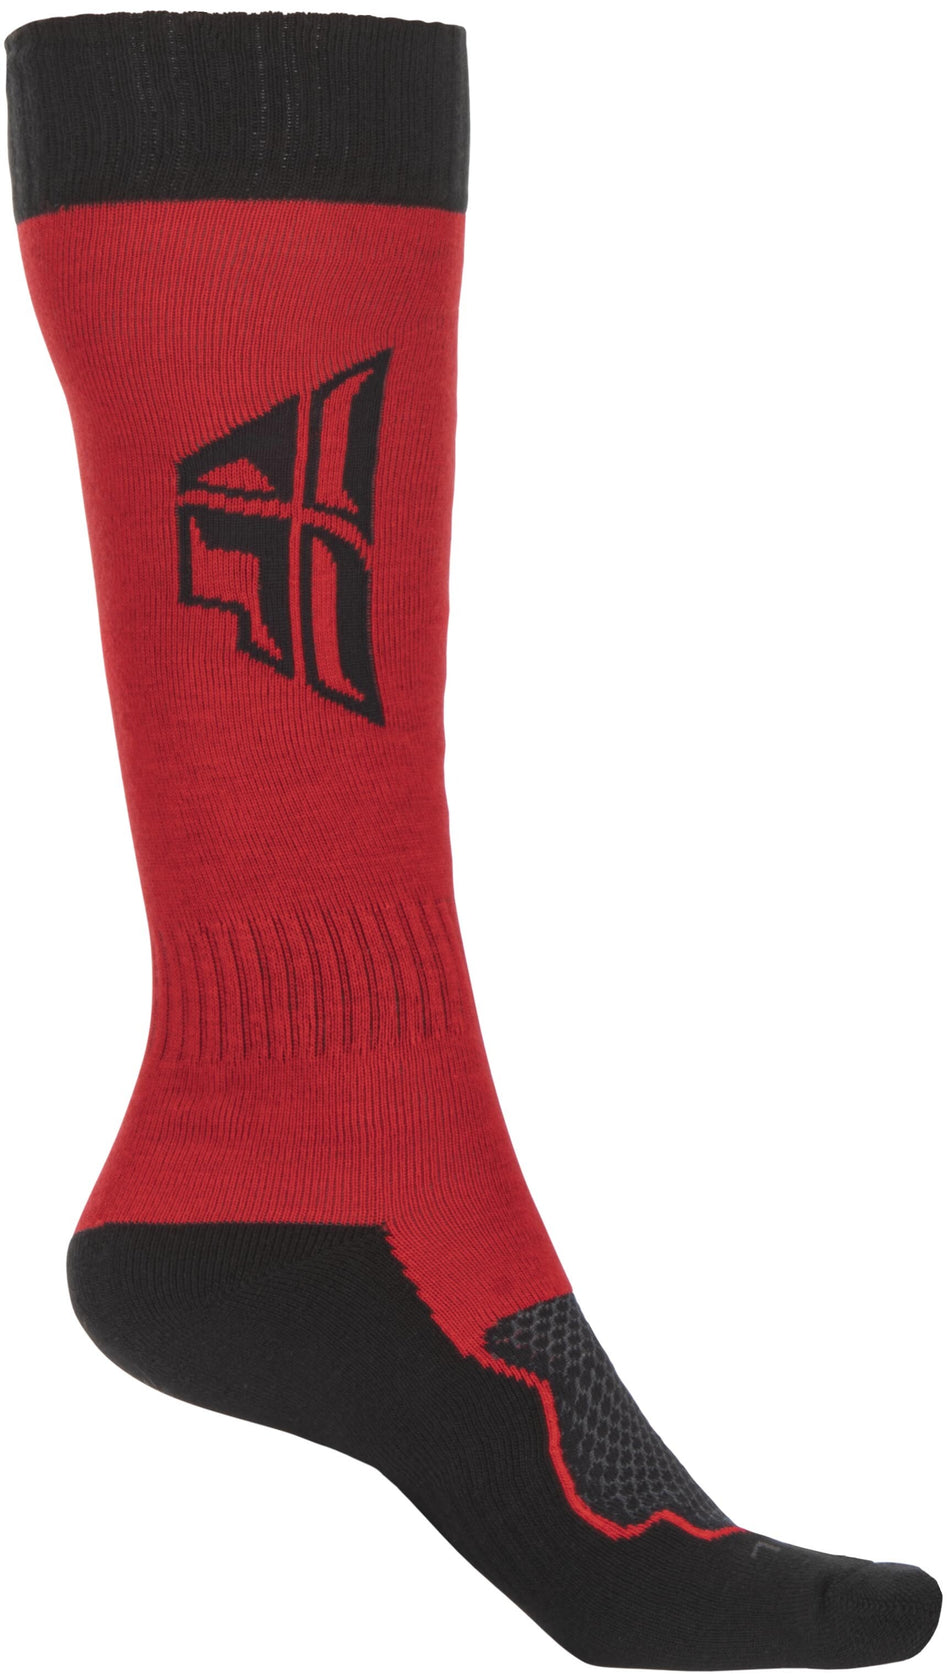 FLY RACING Mx Sock Thick Red/Black Lg/Xl 350-0515L